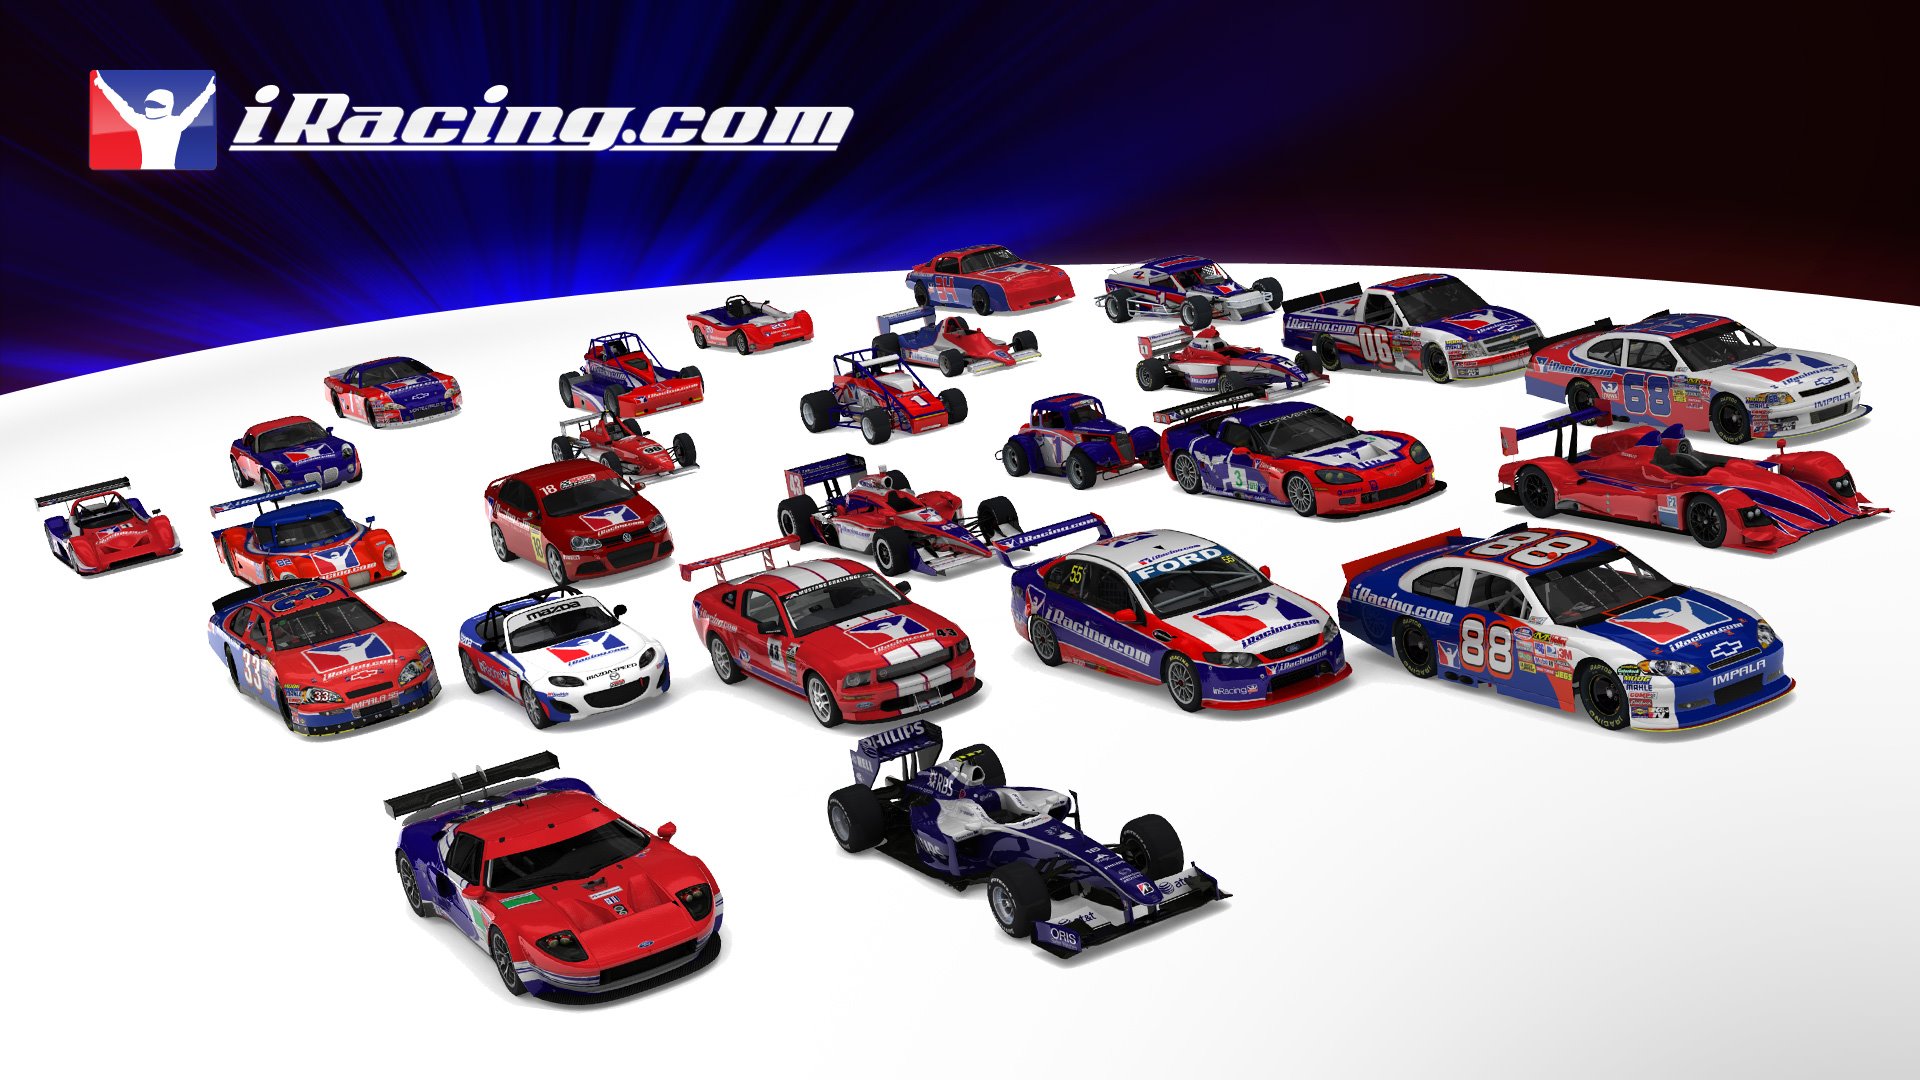 Iracing All Cars Wallpaper Virtualr Sim Racing News